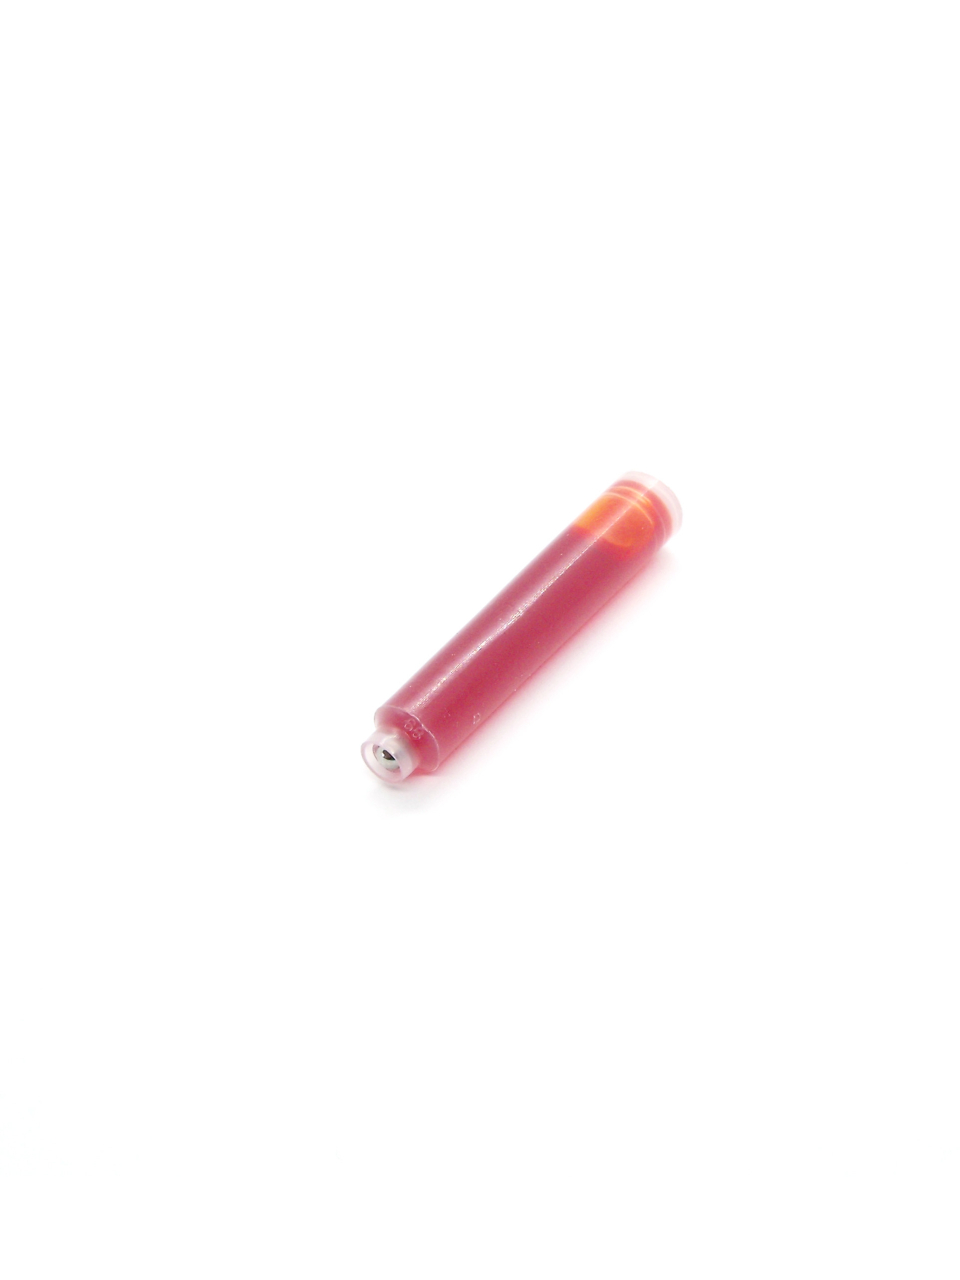 Cartridges For Online Fountain Pens (Orange)